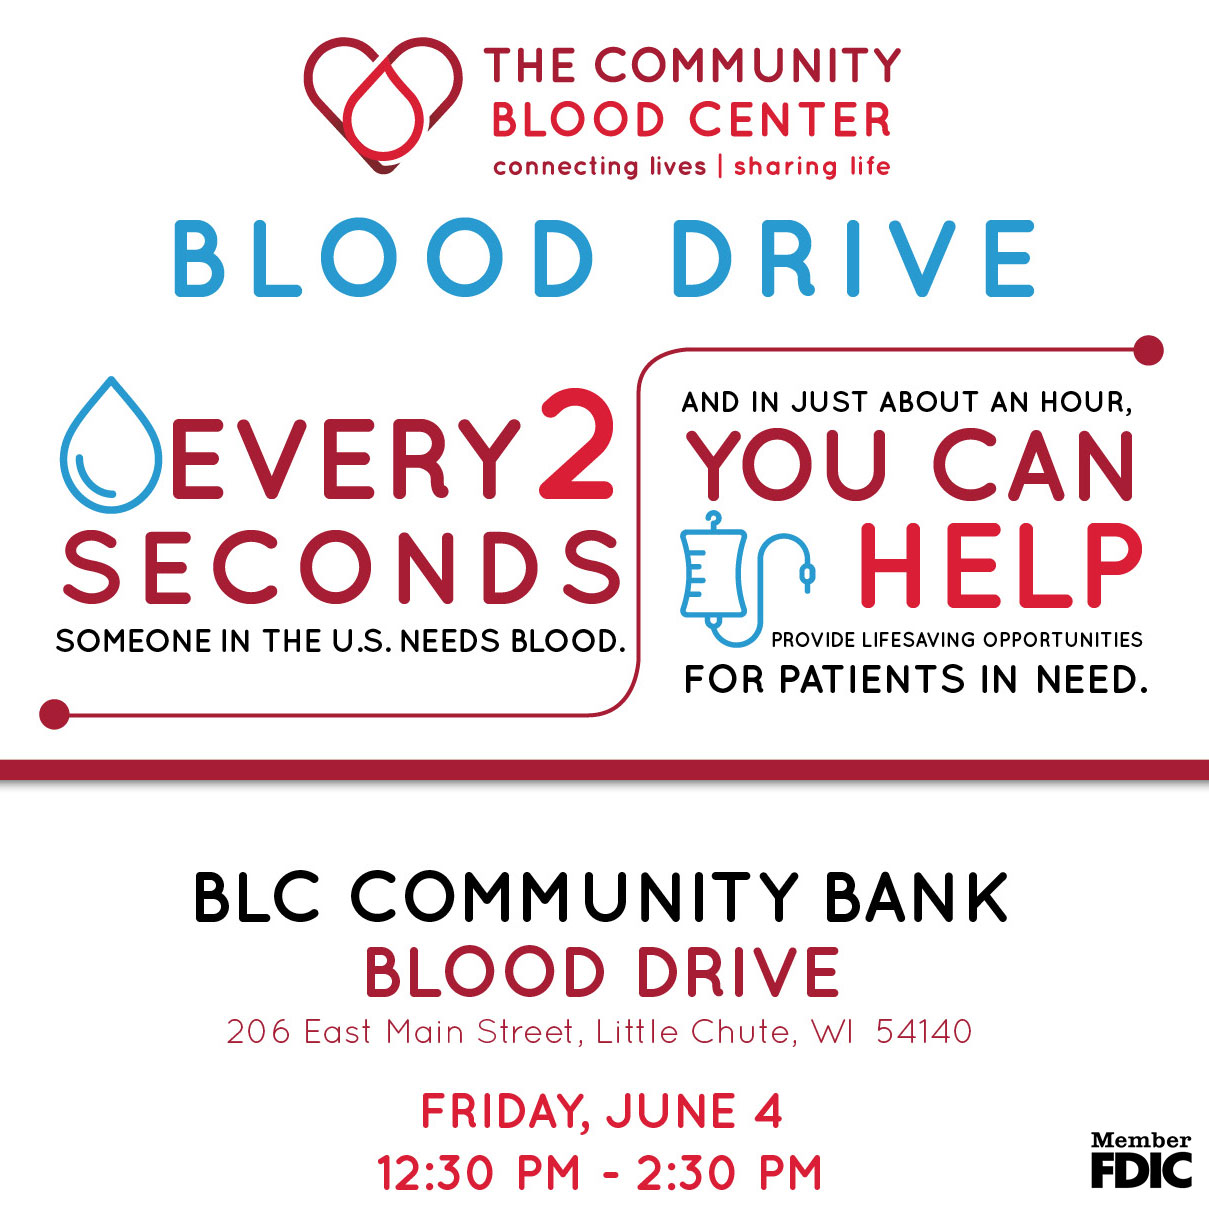 BLC Community Bank Blood Drive, Friday, June 4 12:30 - 2:30 pm